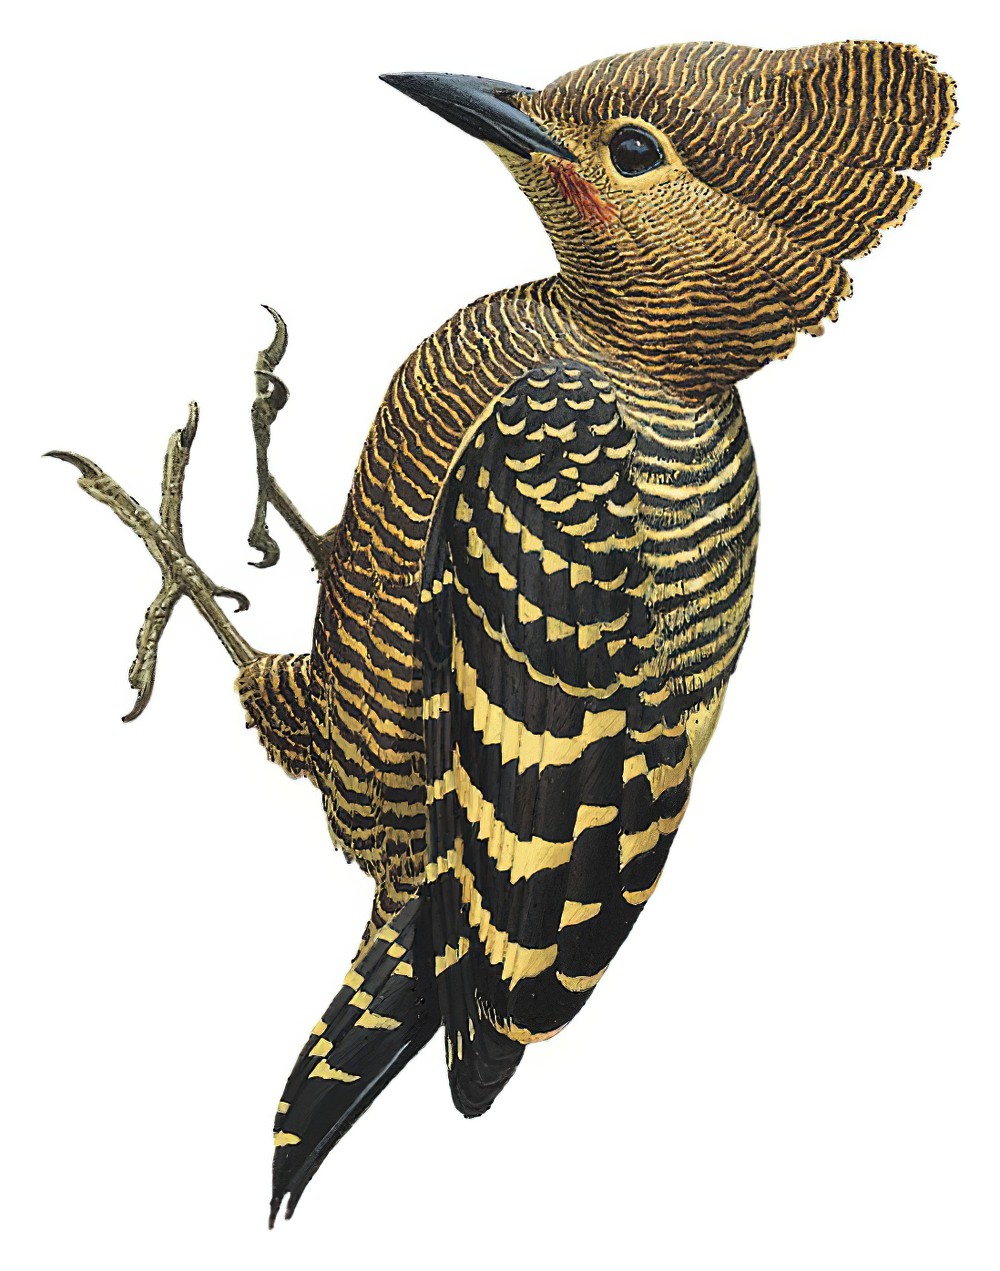 Buff-rumped Woodpecker / Meiglyptes tristis